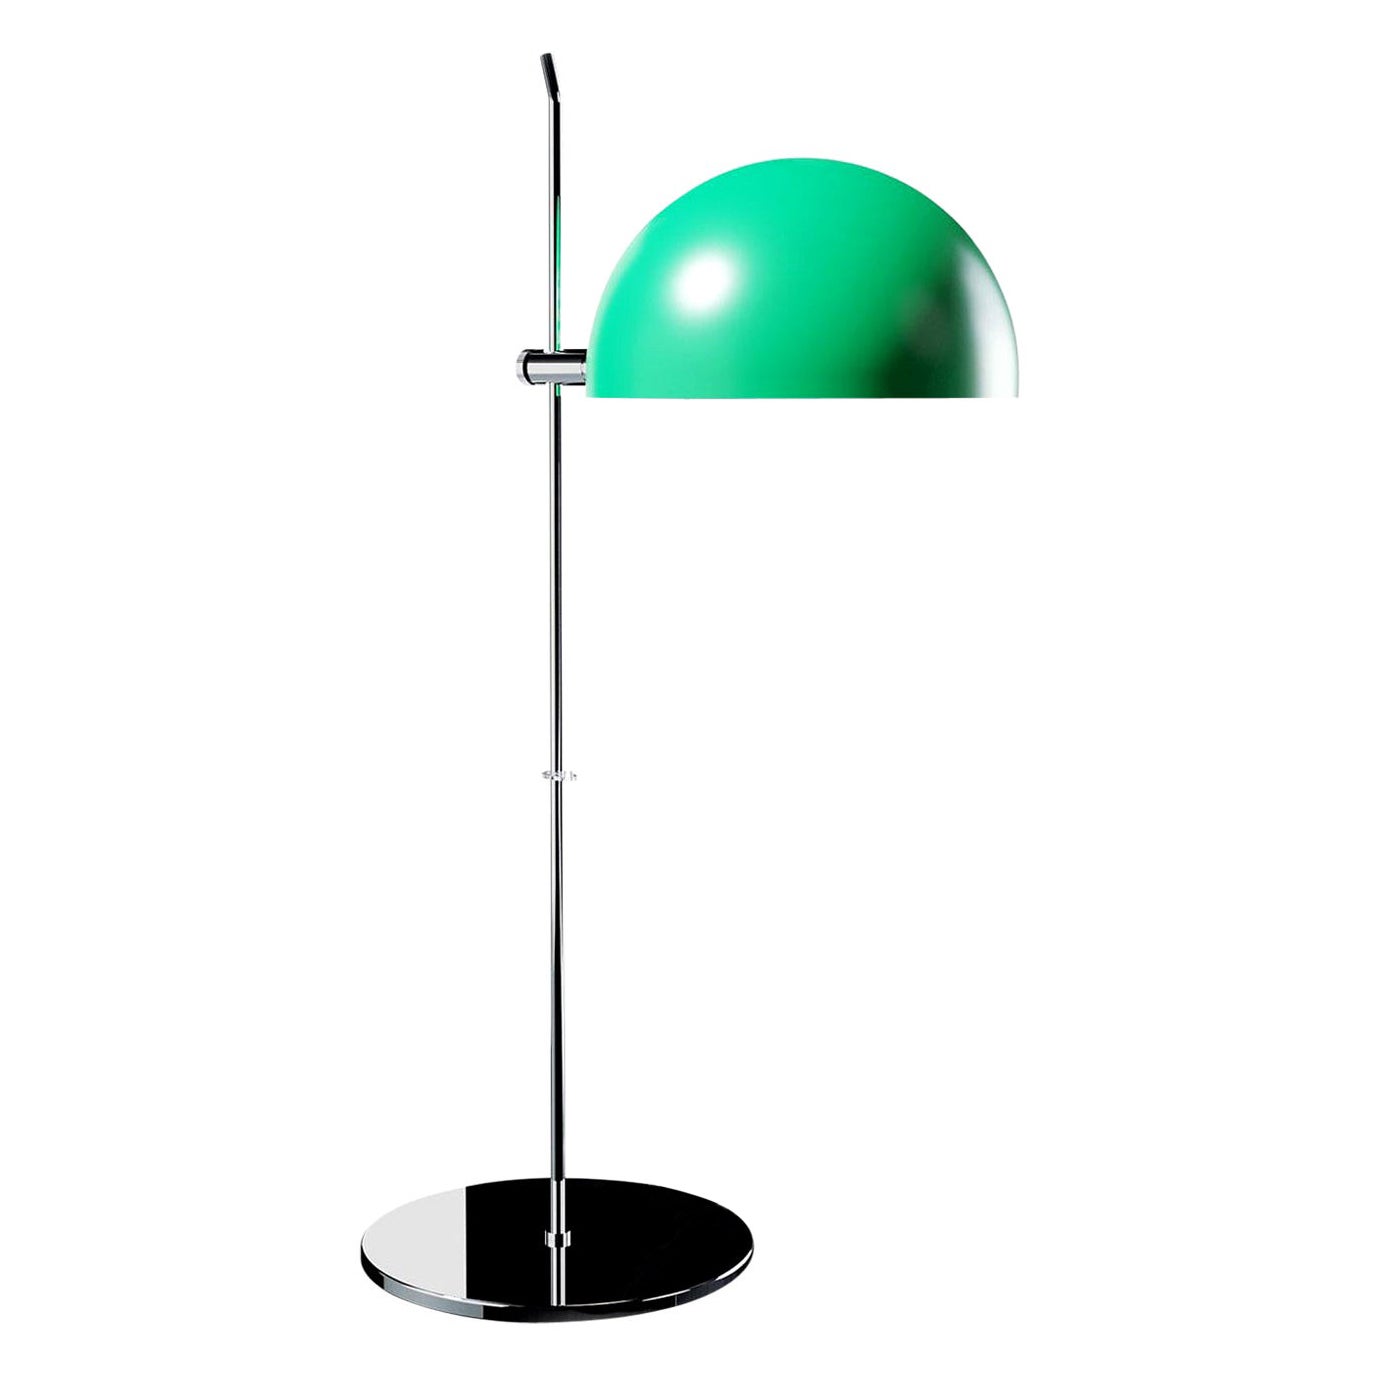 Lampe de bureau « A21 » d'Alain Richard en vert pour Disderot